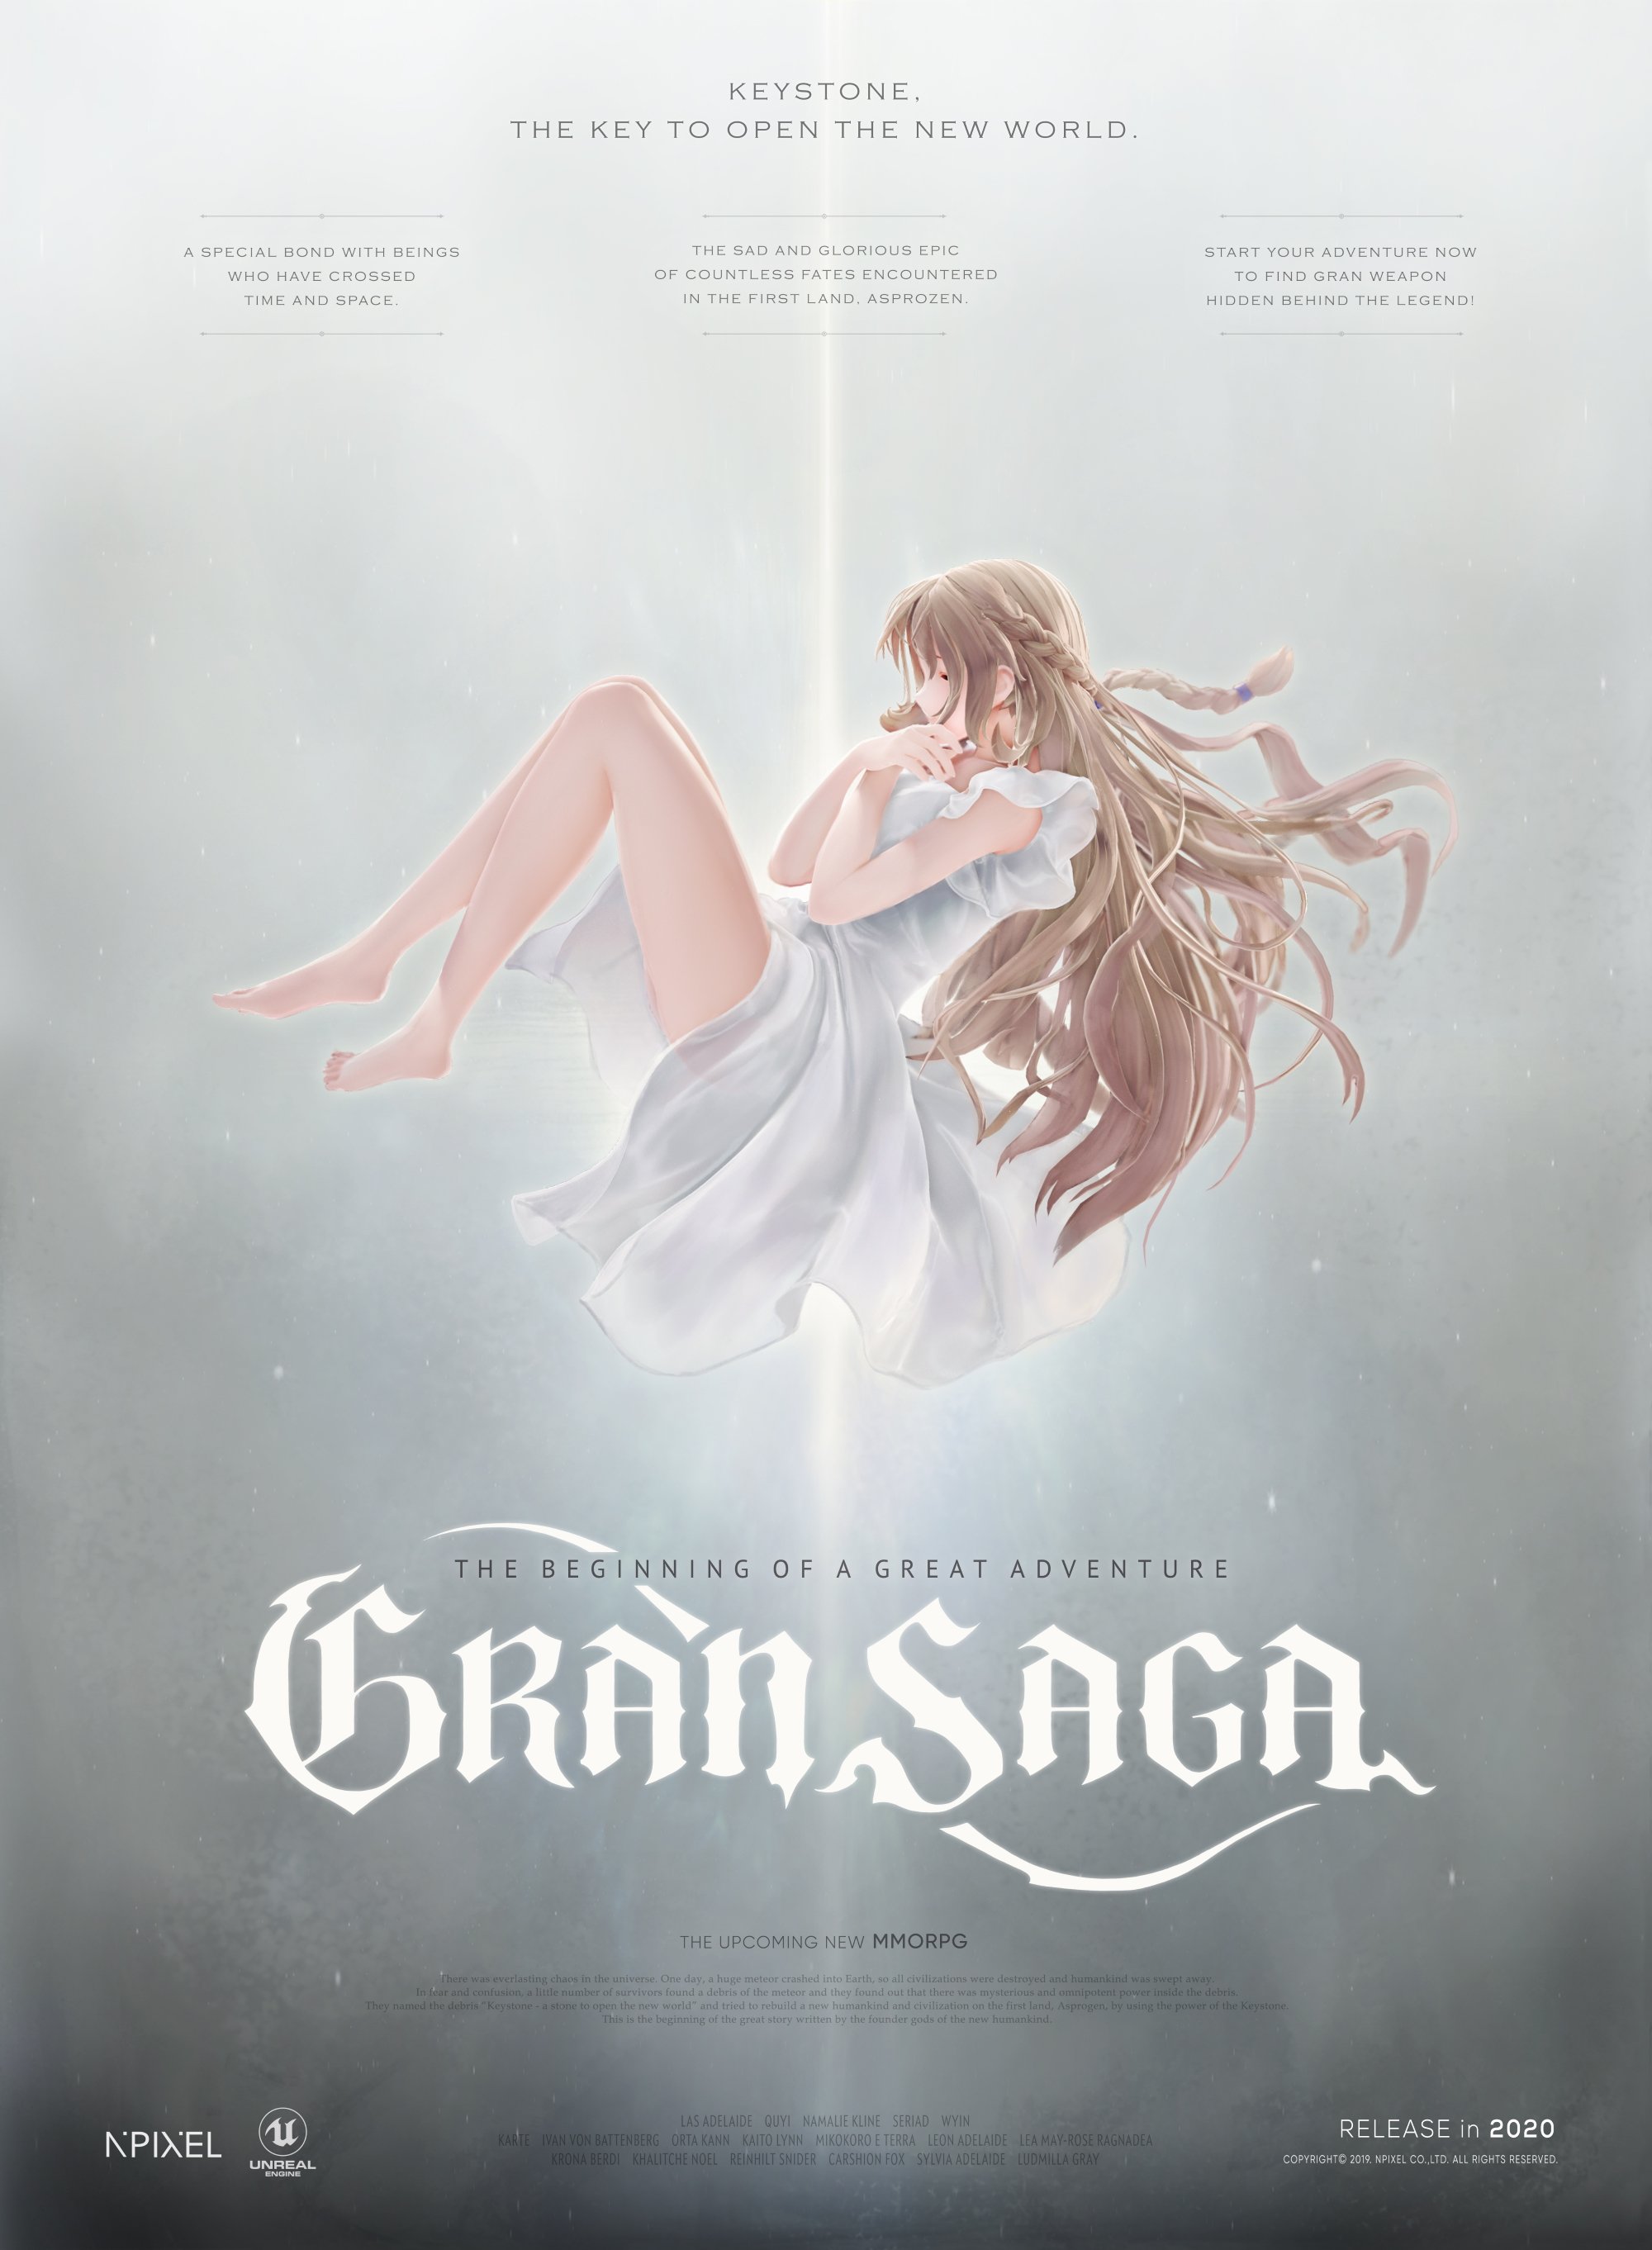 Gran Saga poster